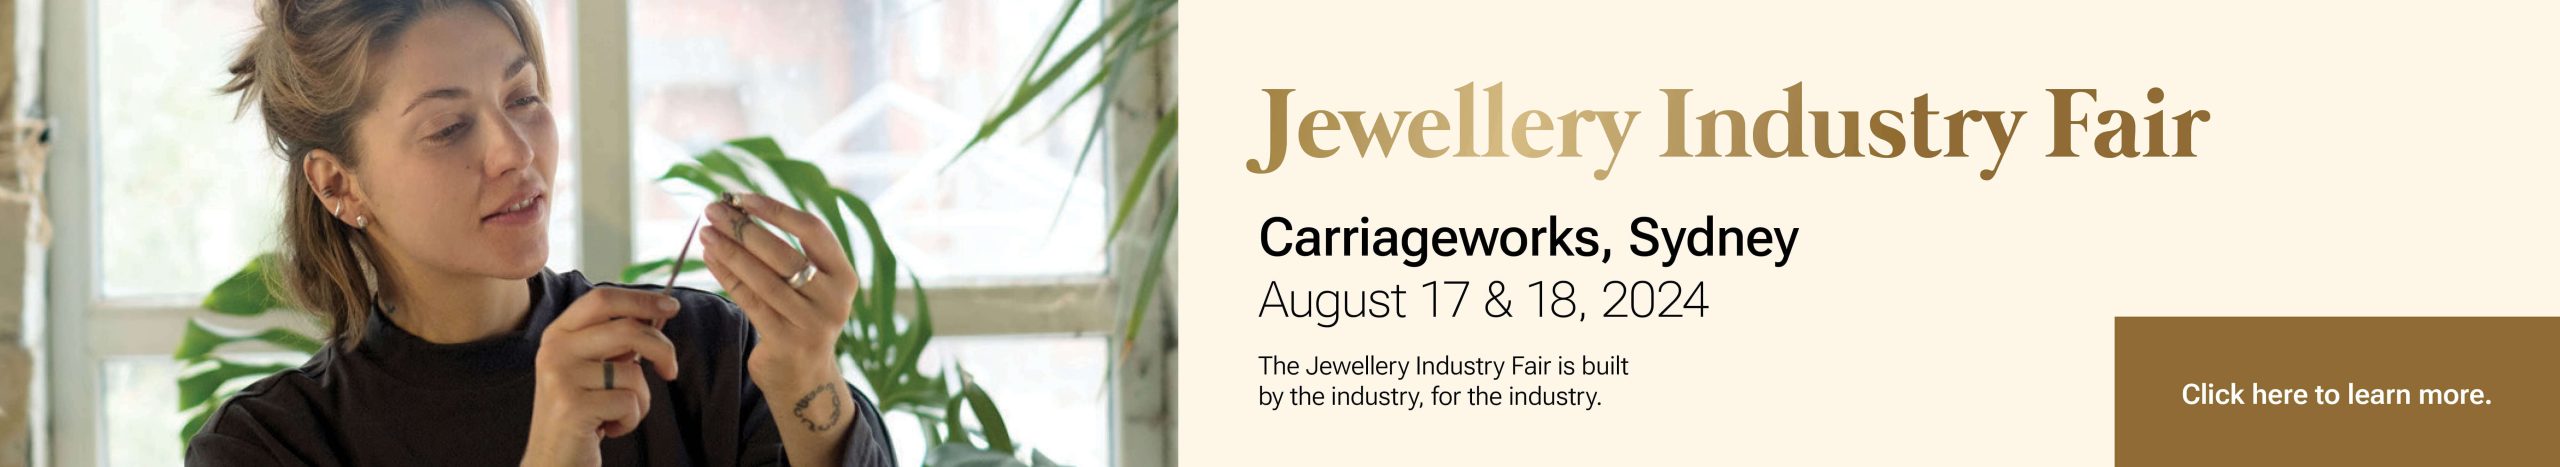 Jewellery Industry Fair